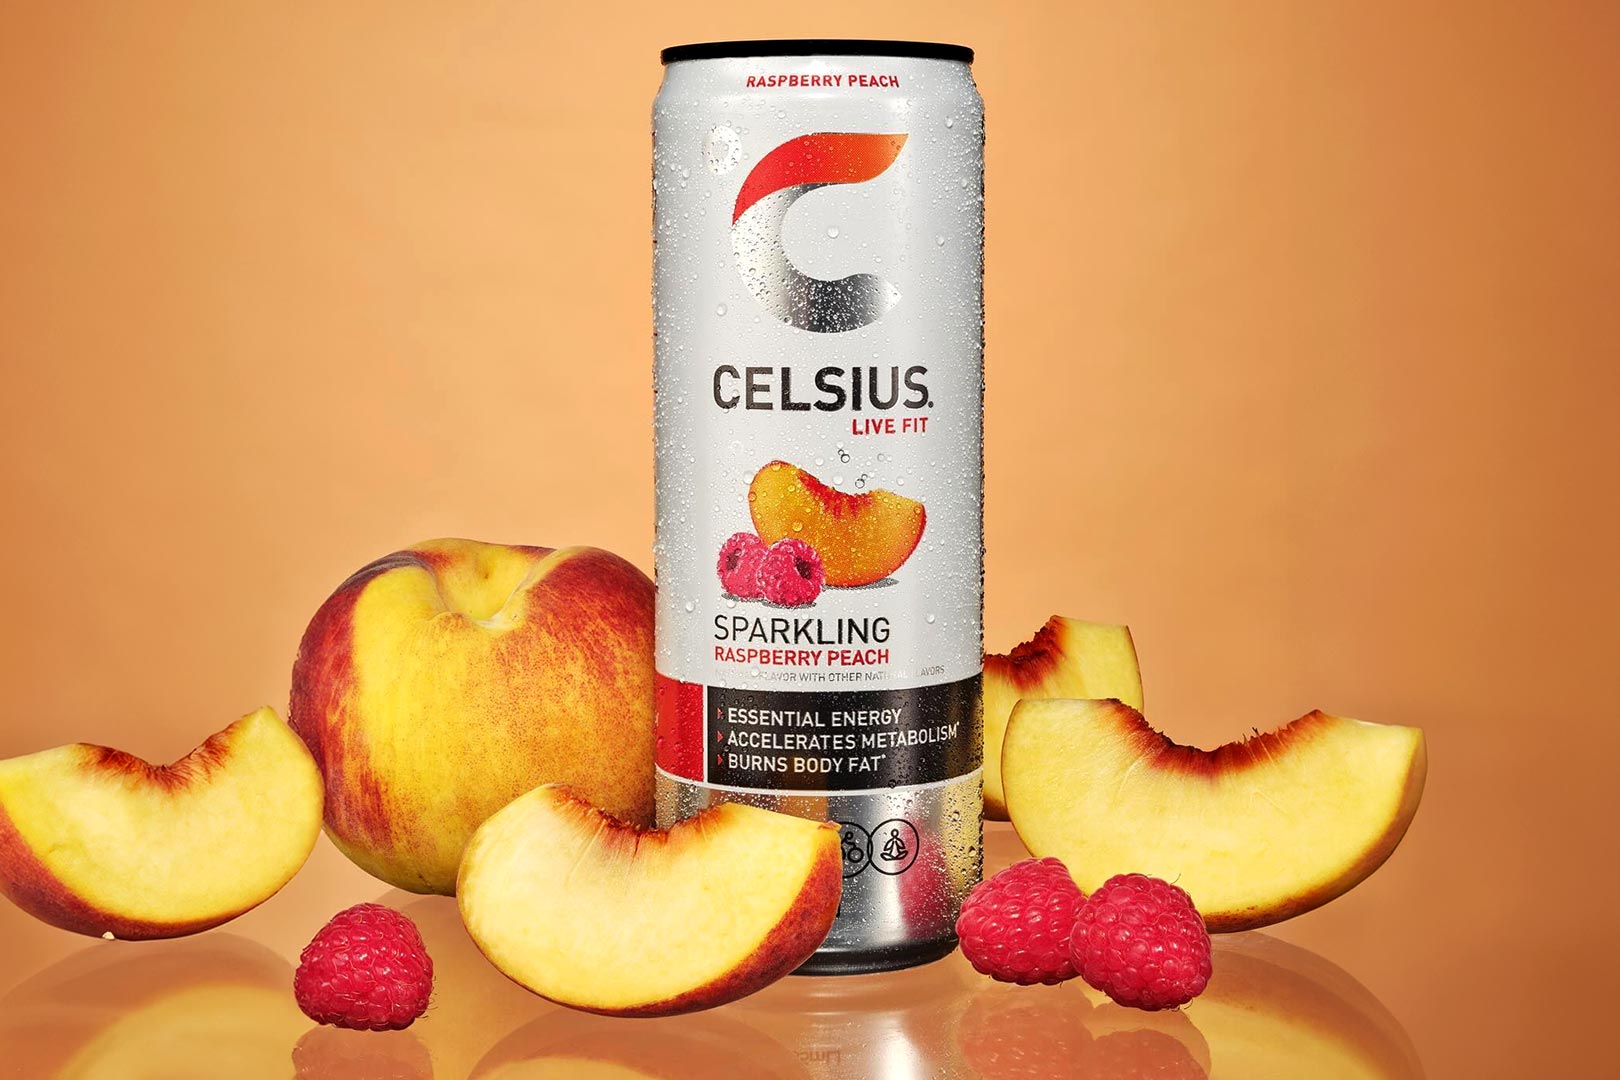 Raspberry Peach Celsius Energy Drink